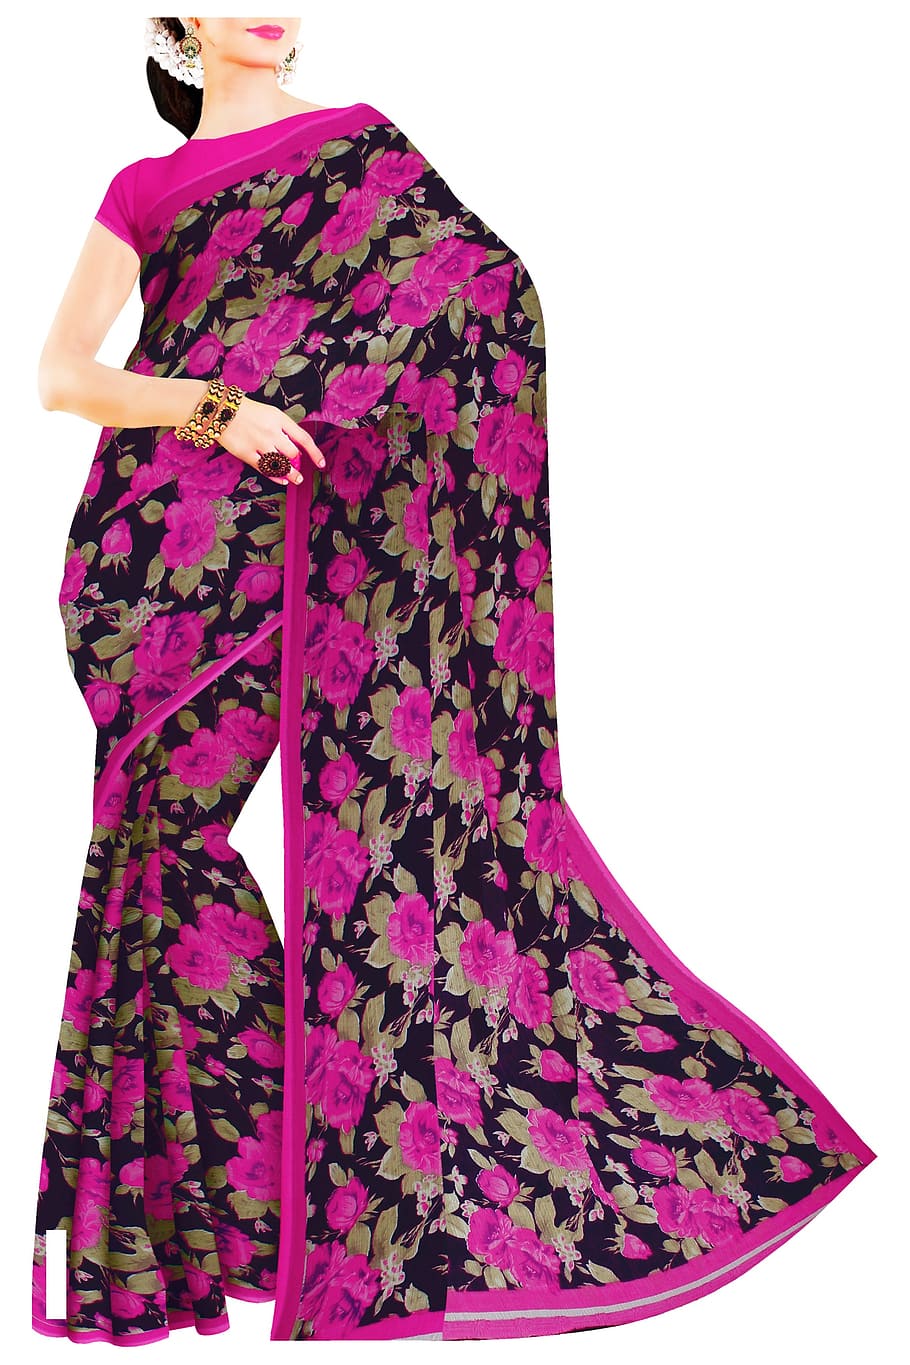 sari, indio, étnico, ropa, moda, seda, vestido, mujer, modelo, algodón